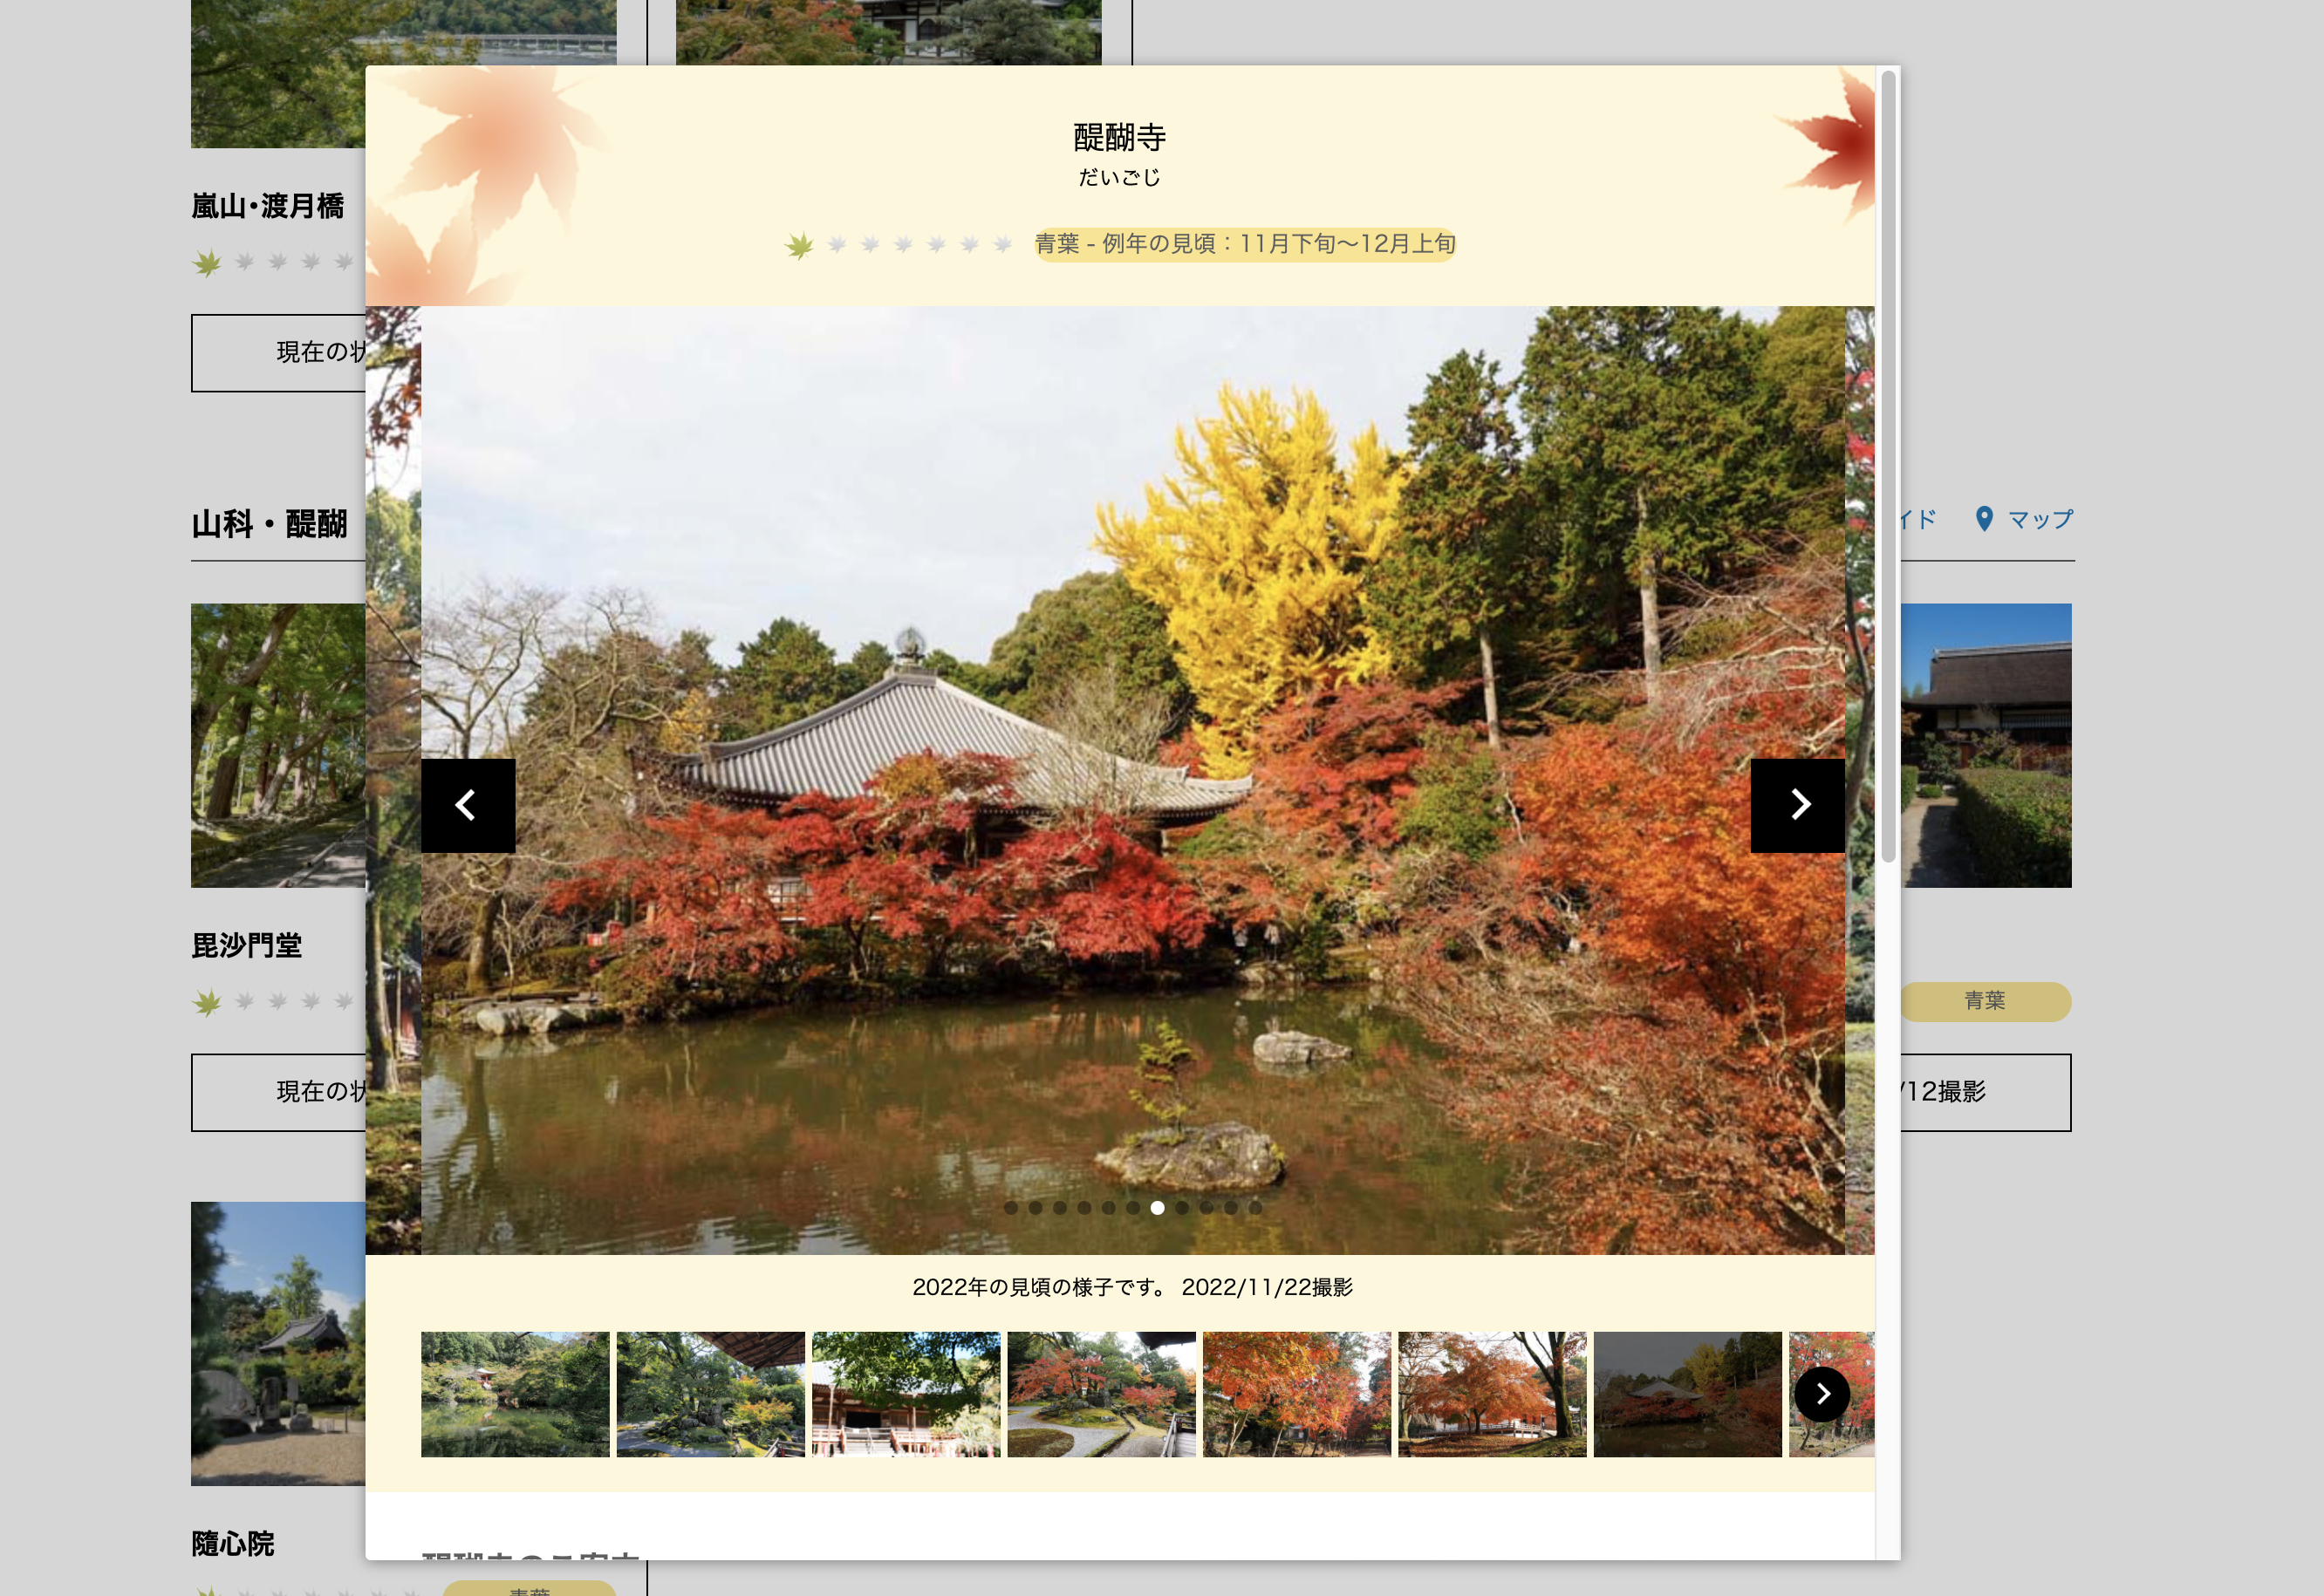 Die Herbst­far­ben im Tem­pel Dai­go-ji im Herbst 2022.